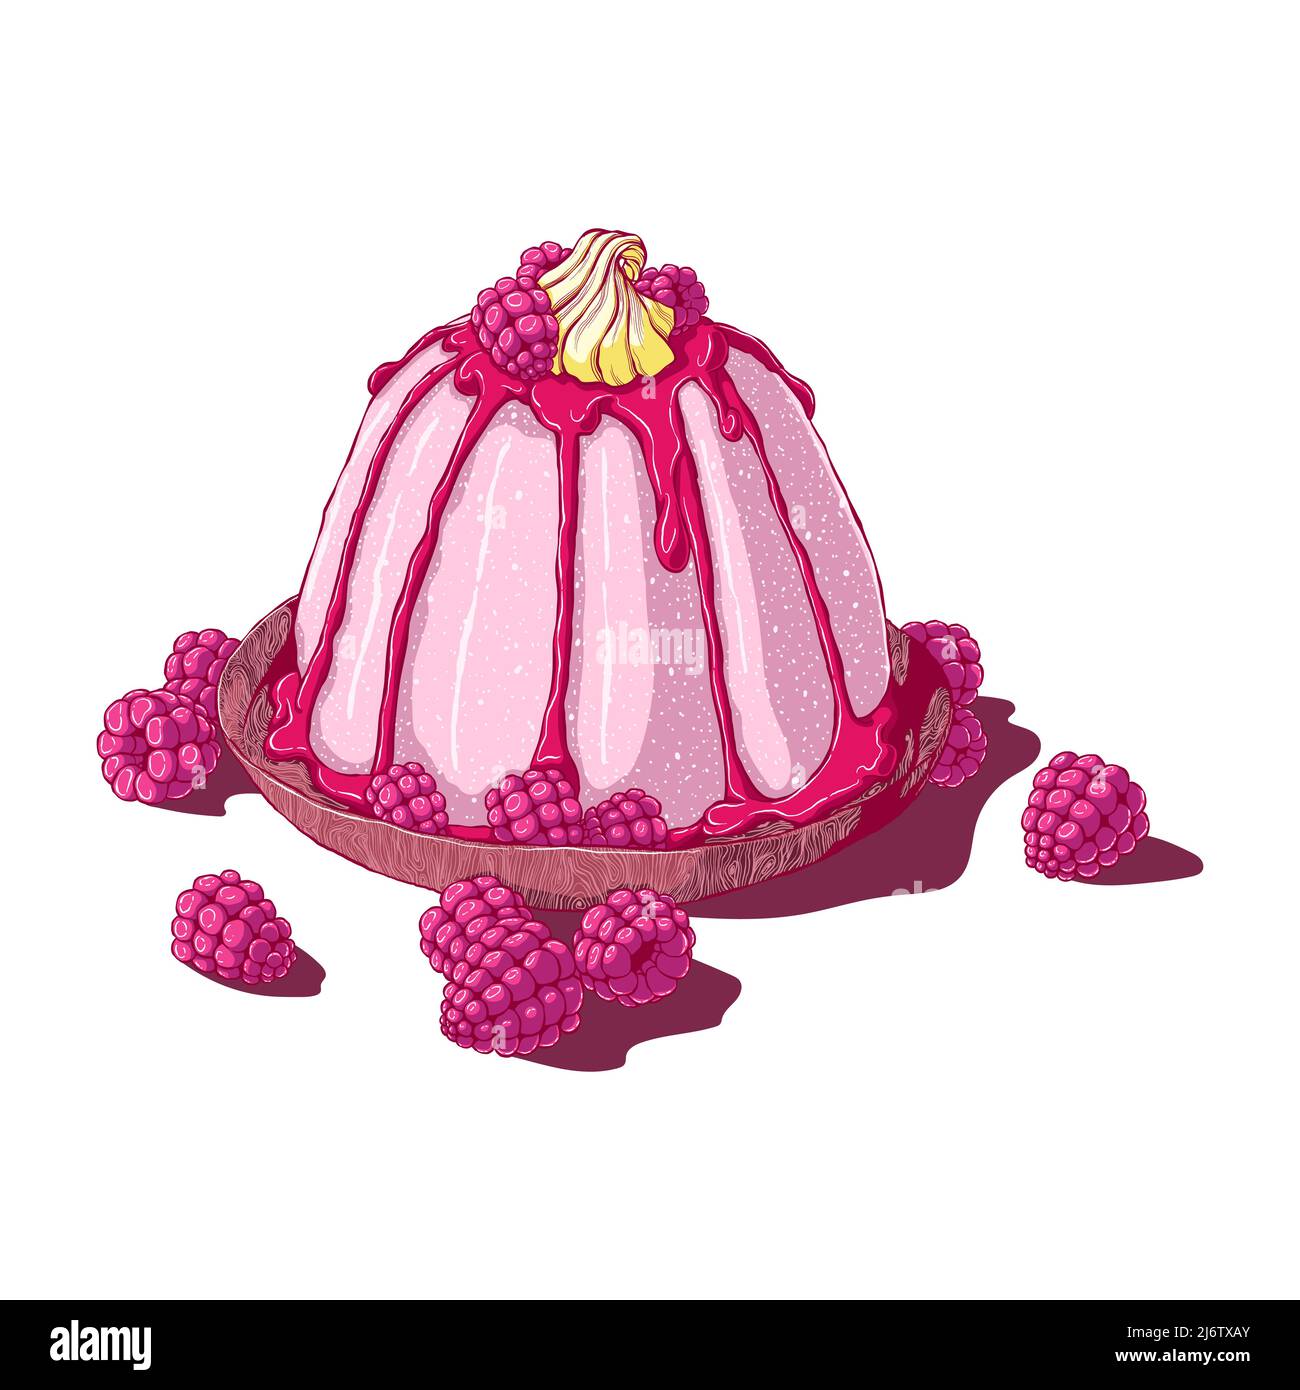 Panna cotta with raspberry. Hand drawn vector illustration in cartoon style. Isolated on white background. Italian dessert. Stock Vector